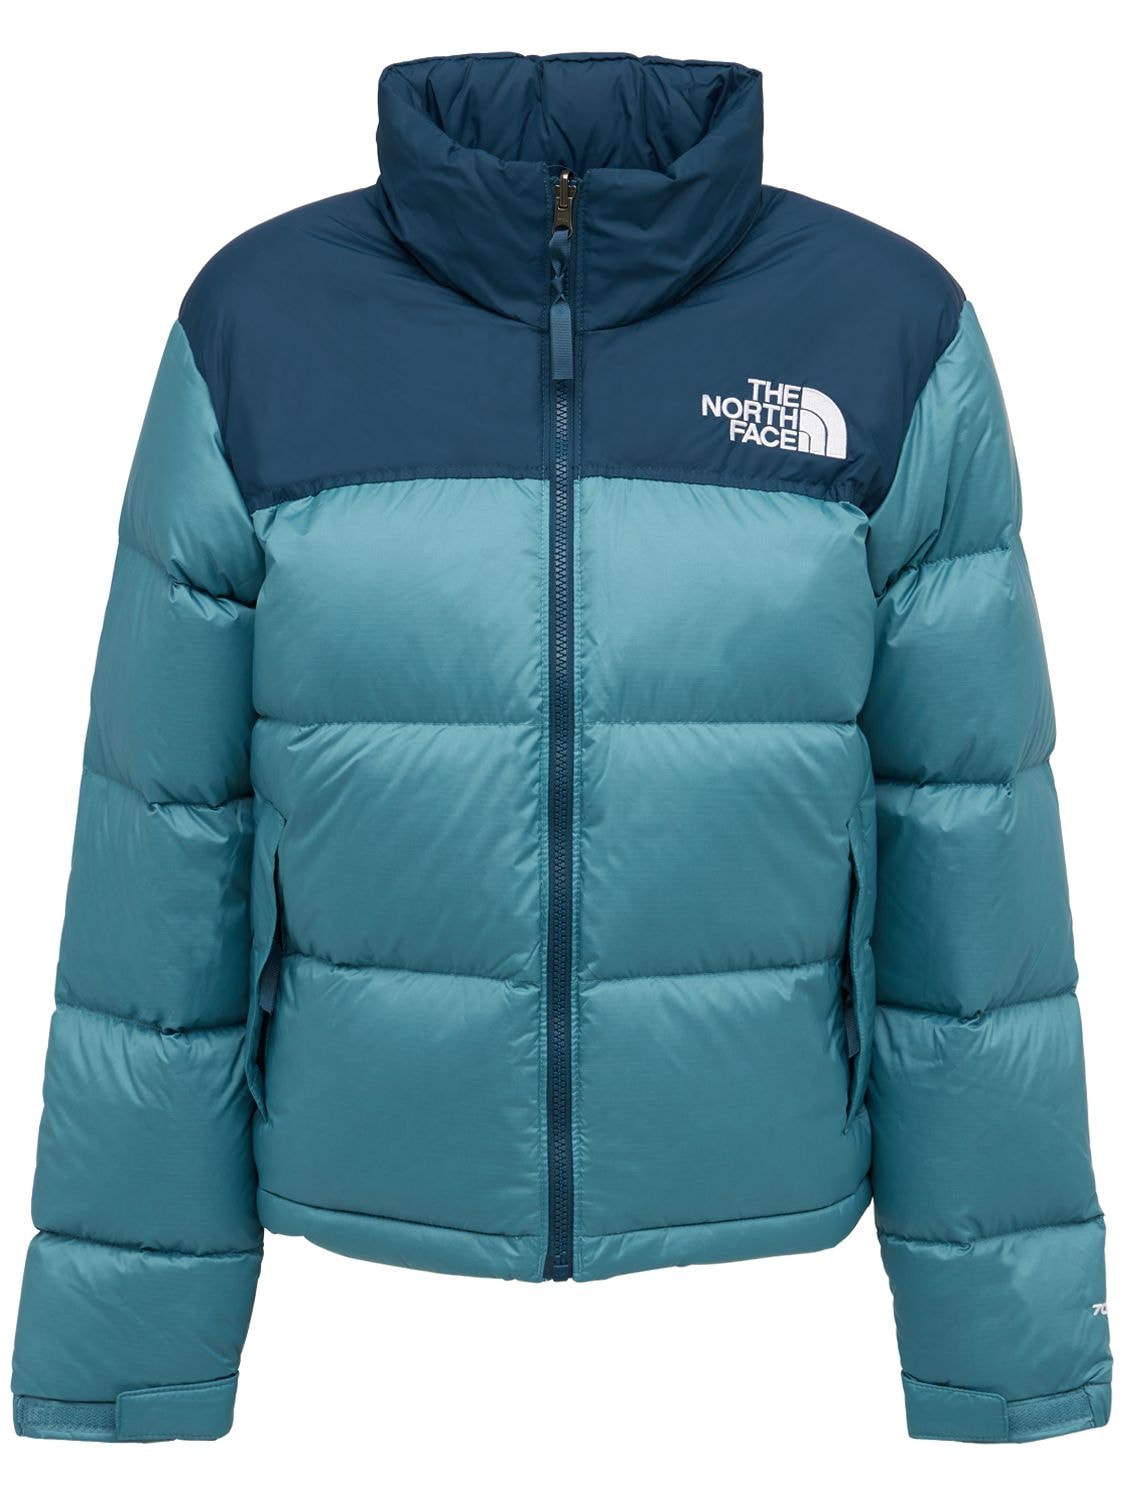 The North Face 1996 Retro Nuptse Down Jacket In Blue